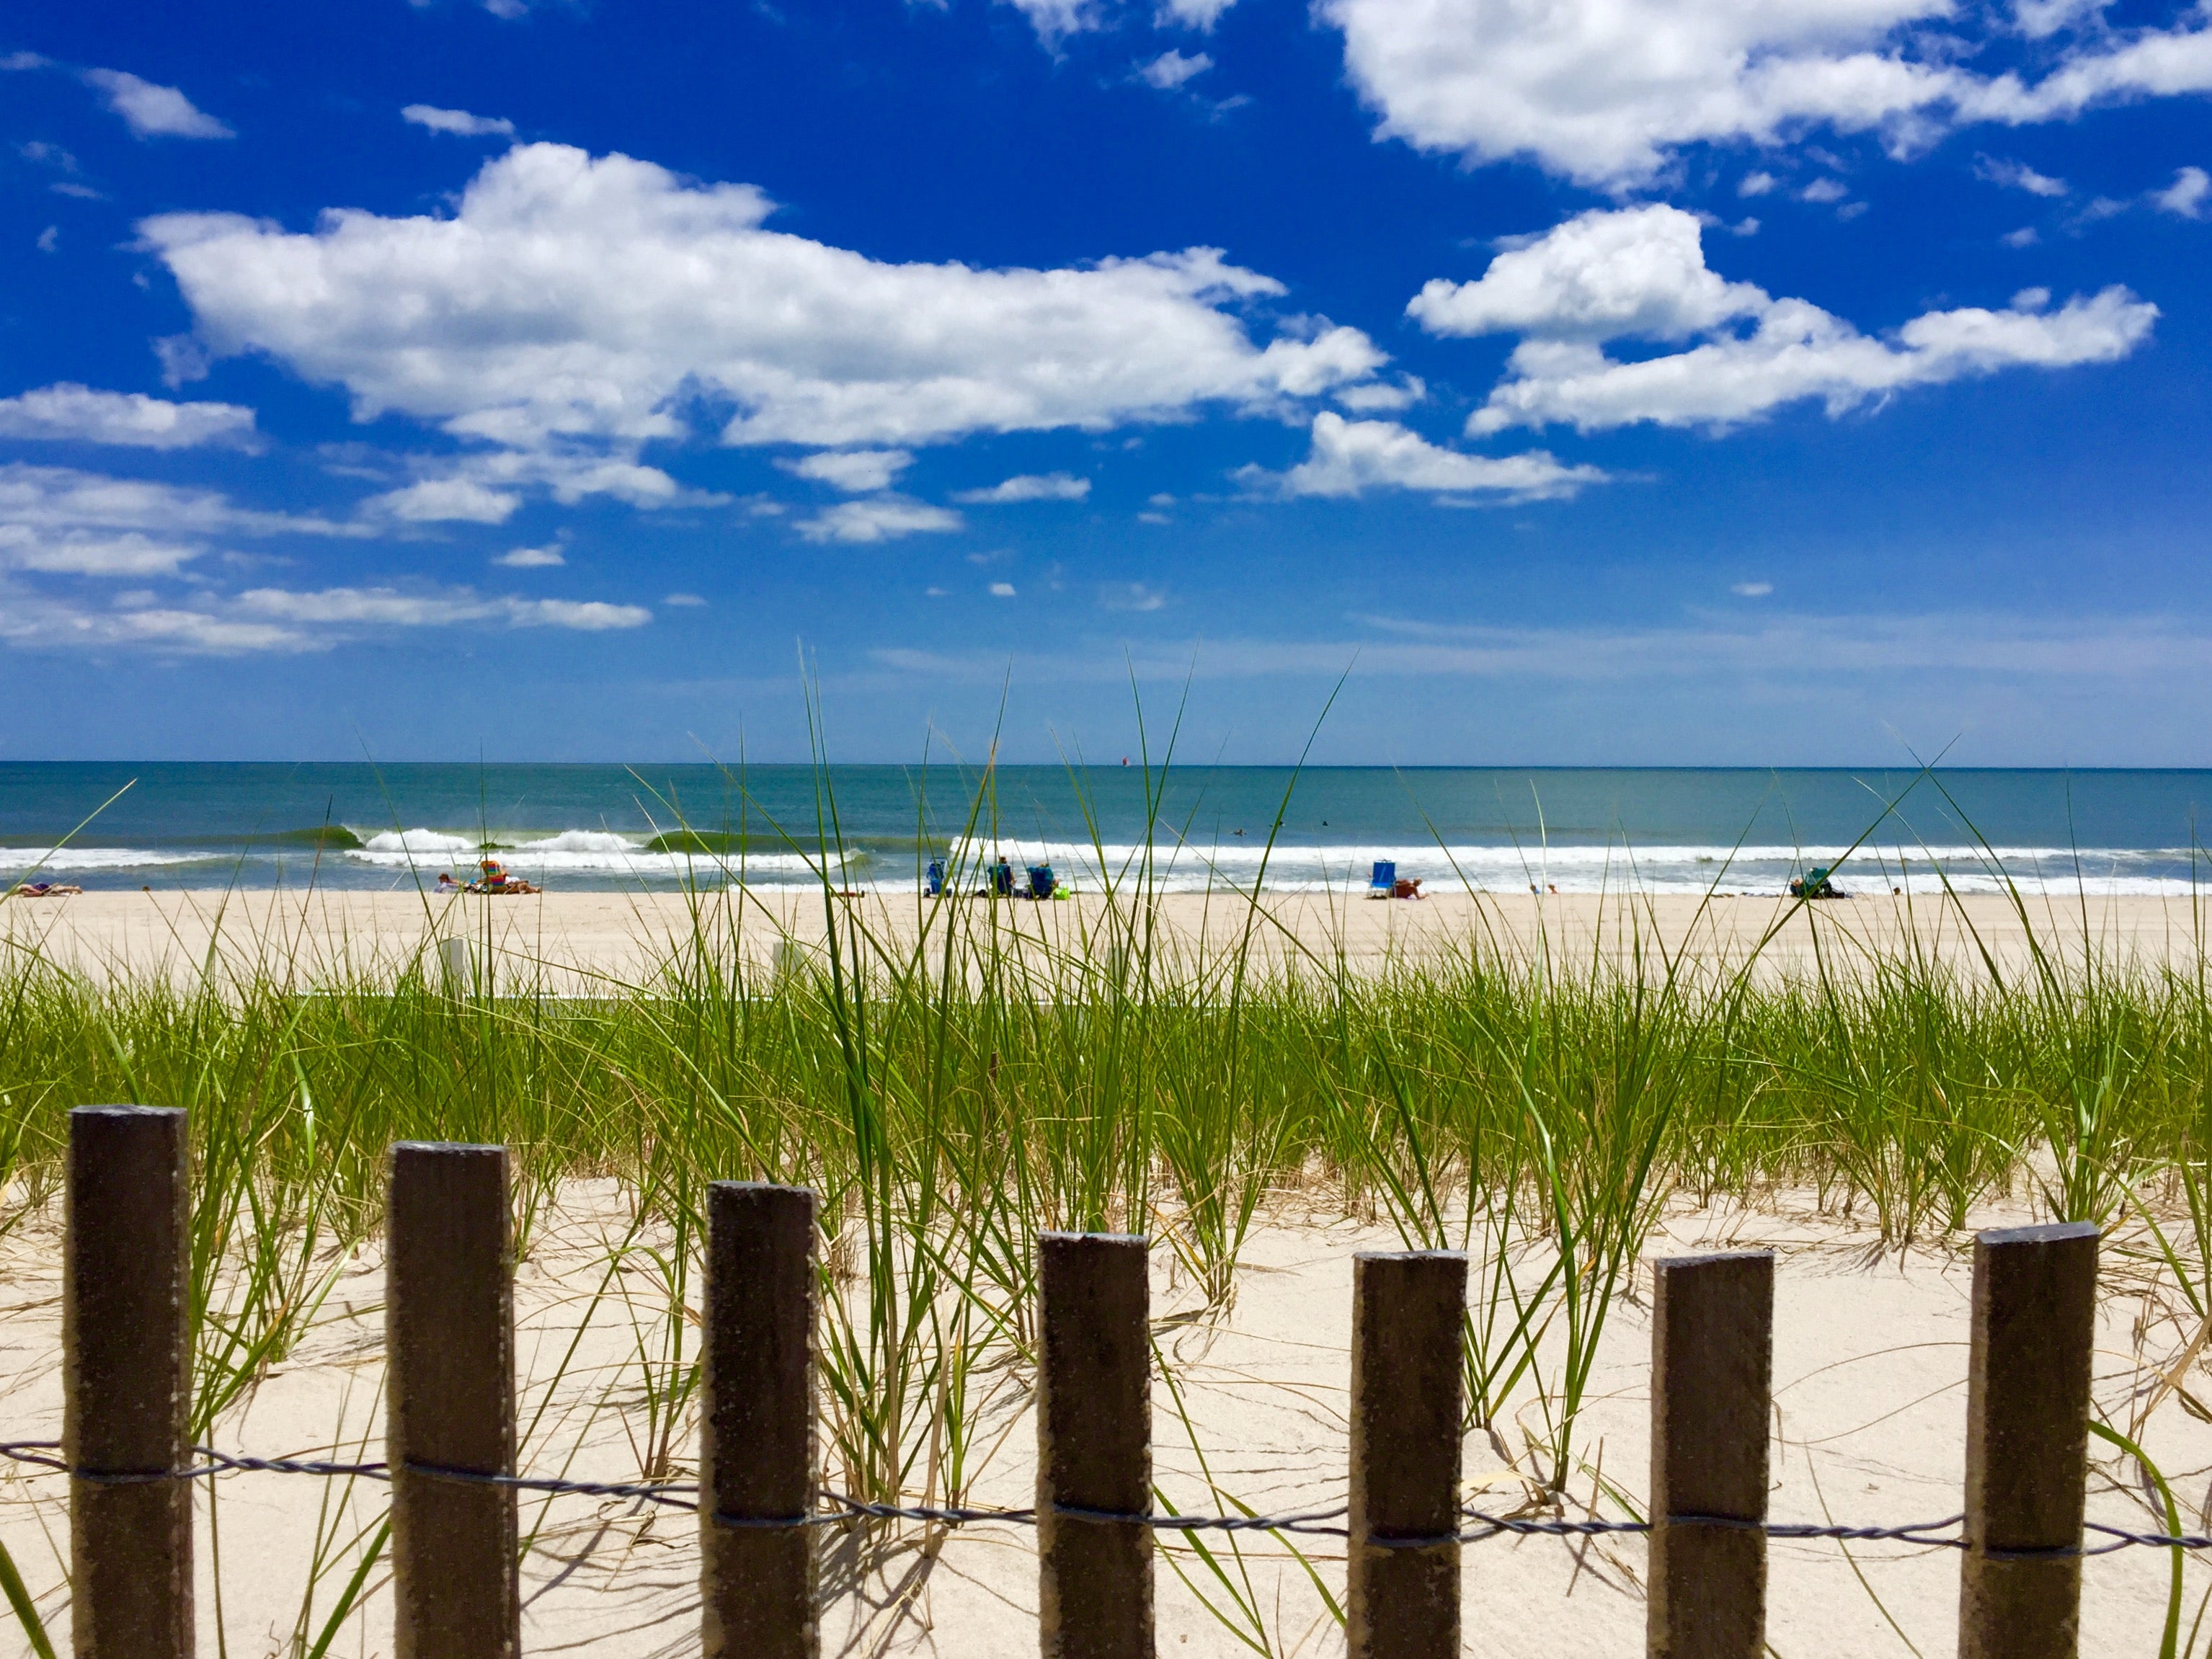  A Seaside Park dune. (Photo: Justin Auciello/for NewsWorks) 